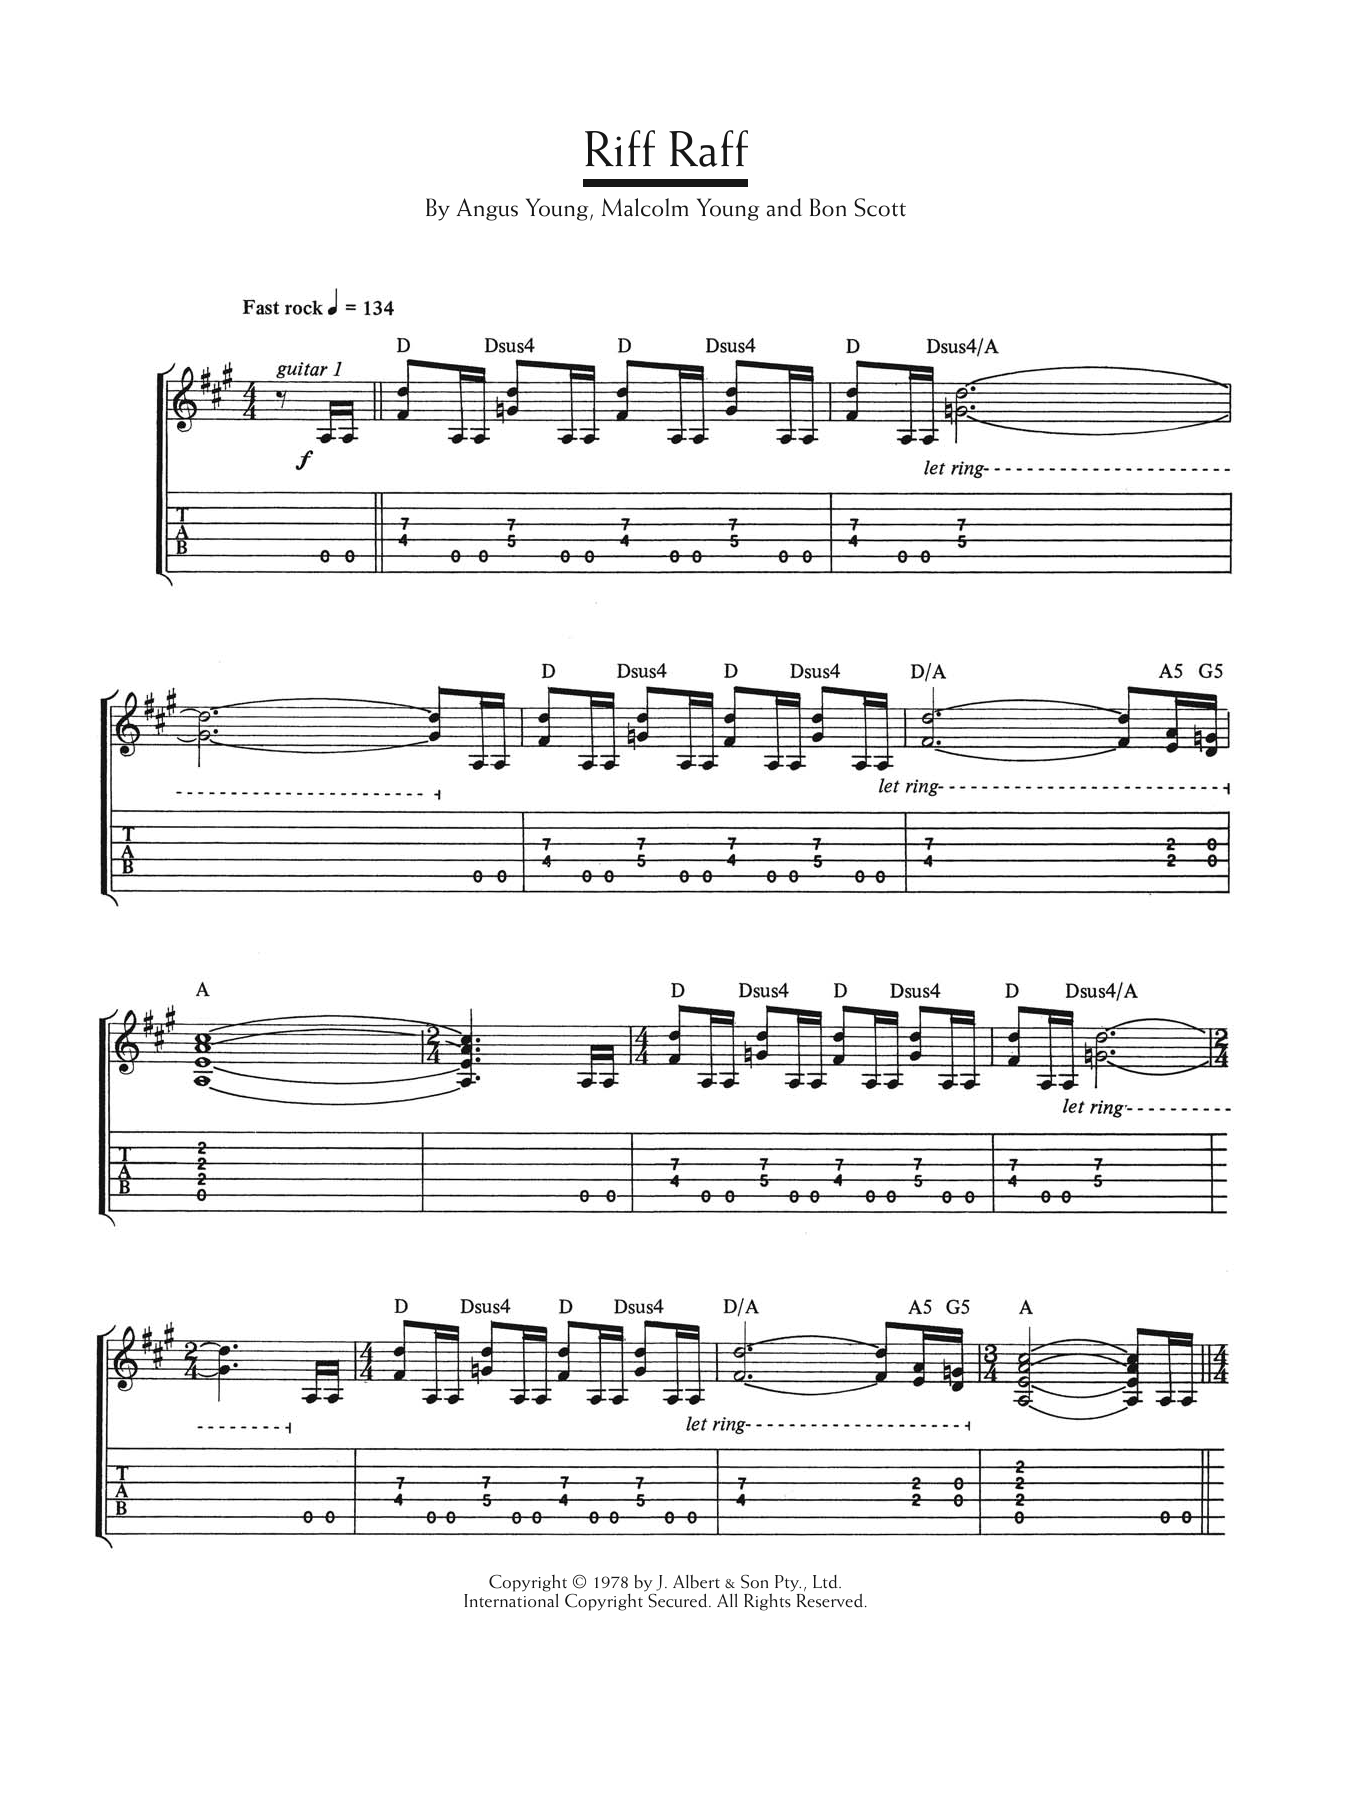 AC/DC Riff Raff Sheet Music Notes & Chords for Guitar Tab - Download or Print PDF